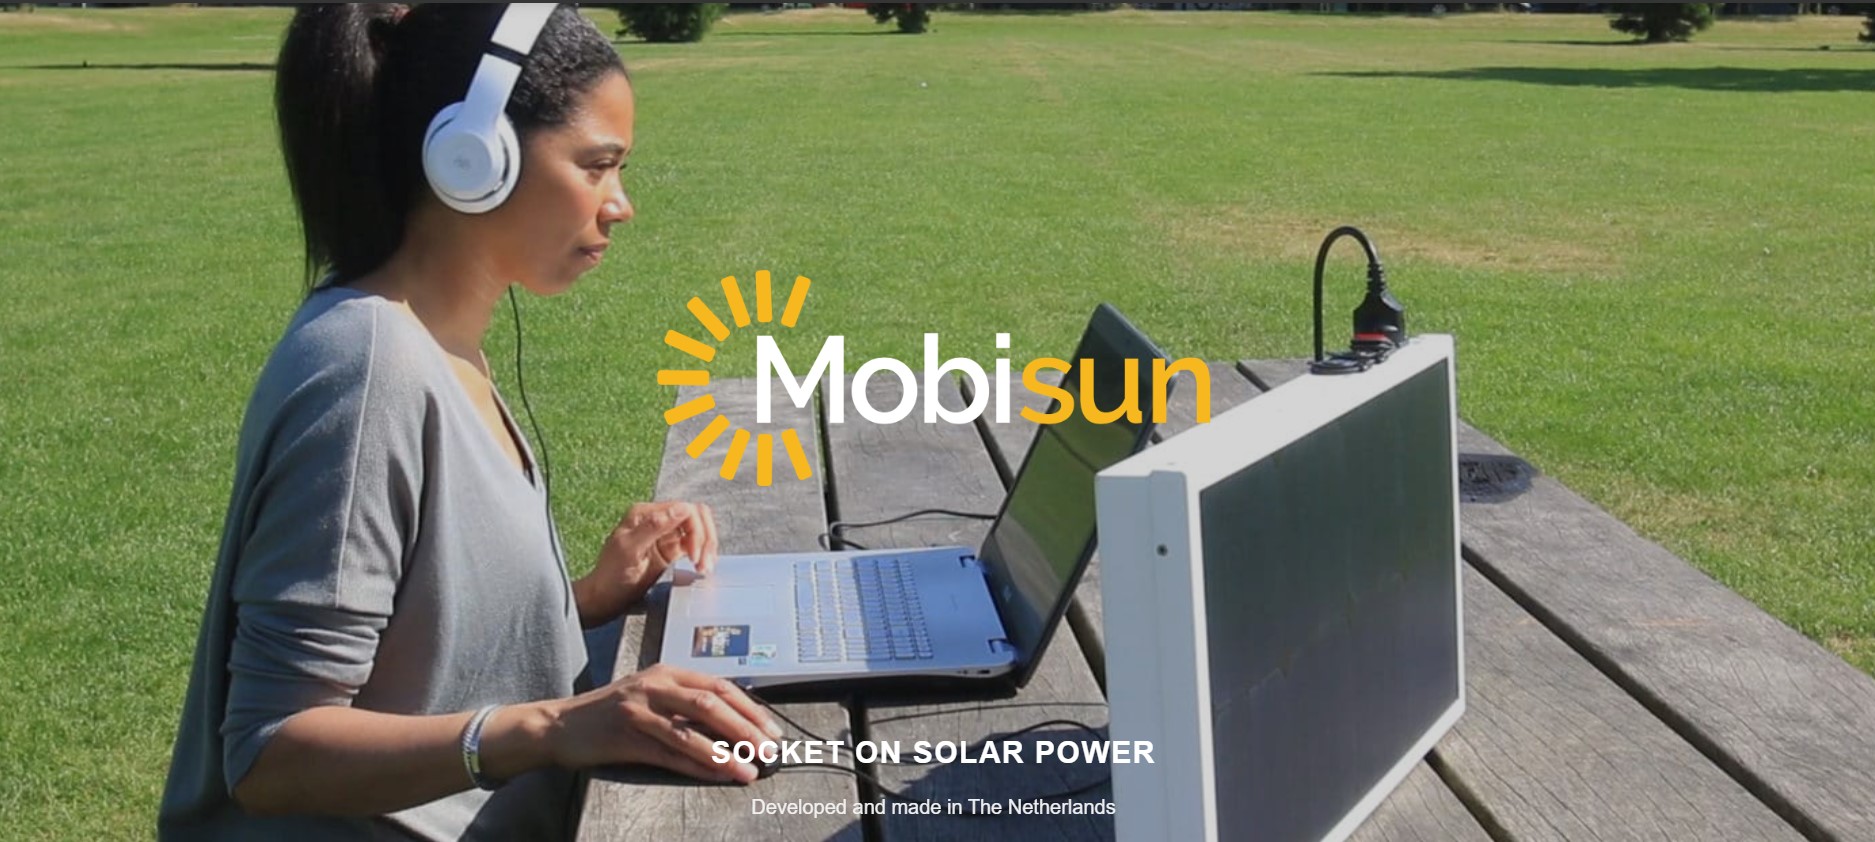 60W Mobisun portable solar panel back (2)